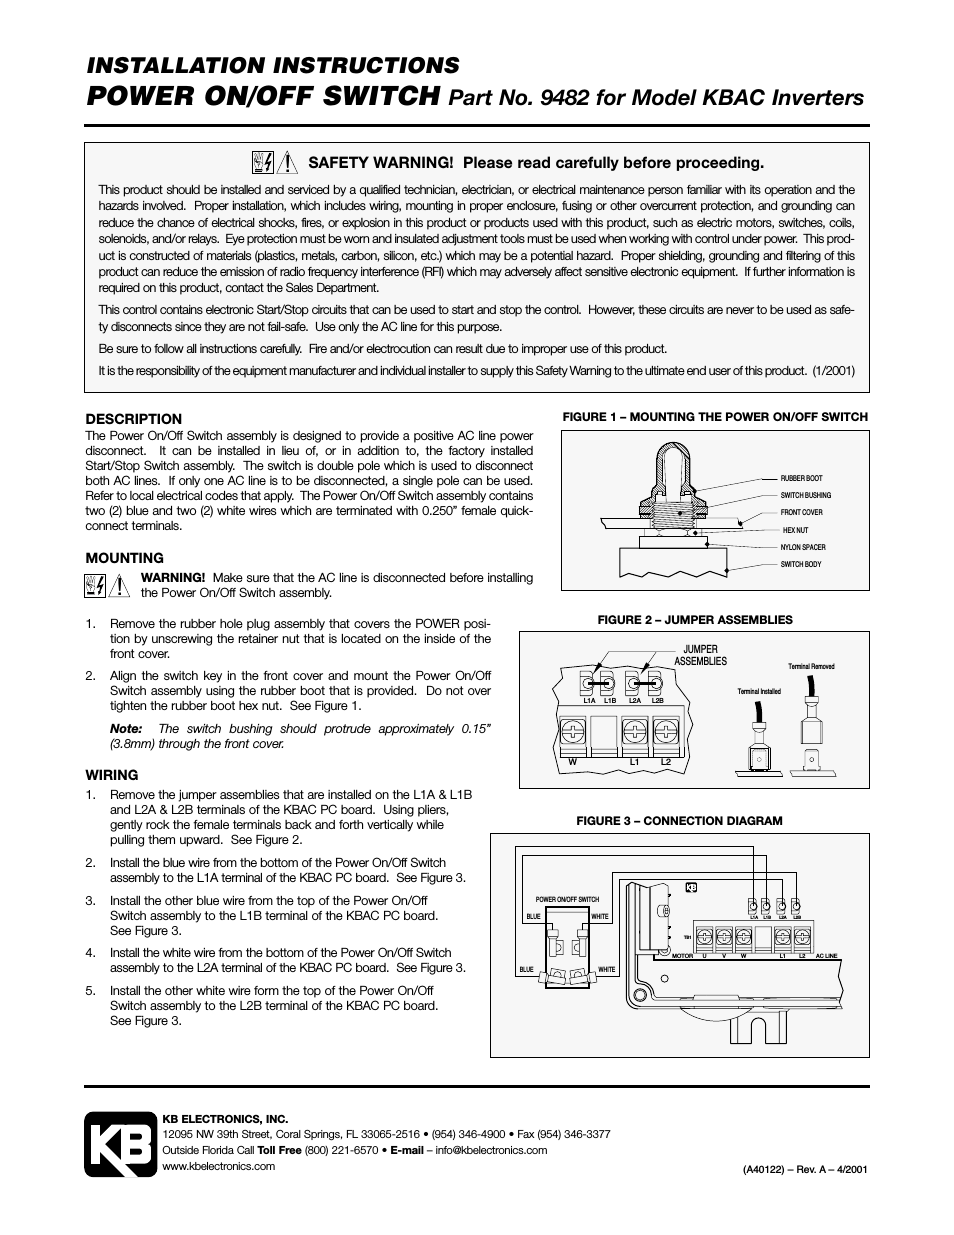 KBAC/KBDA -24D Power On/Off Switch Kit